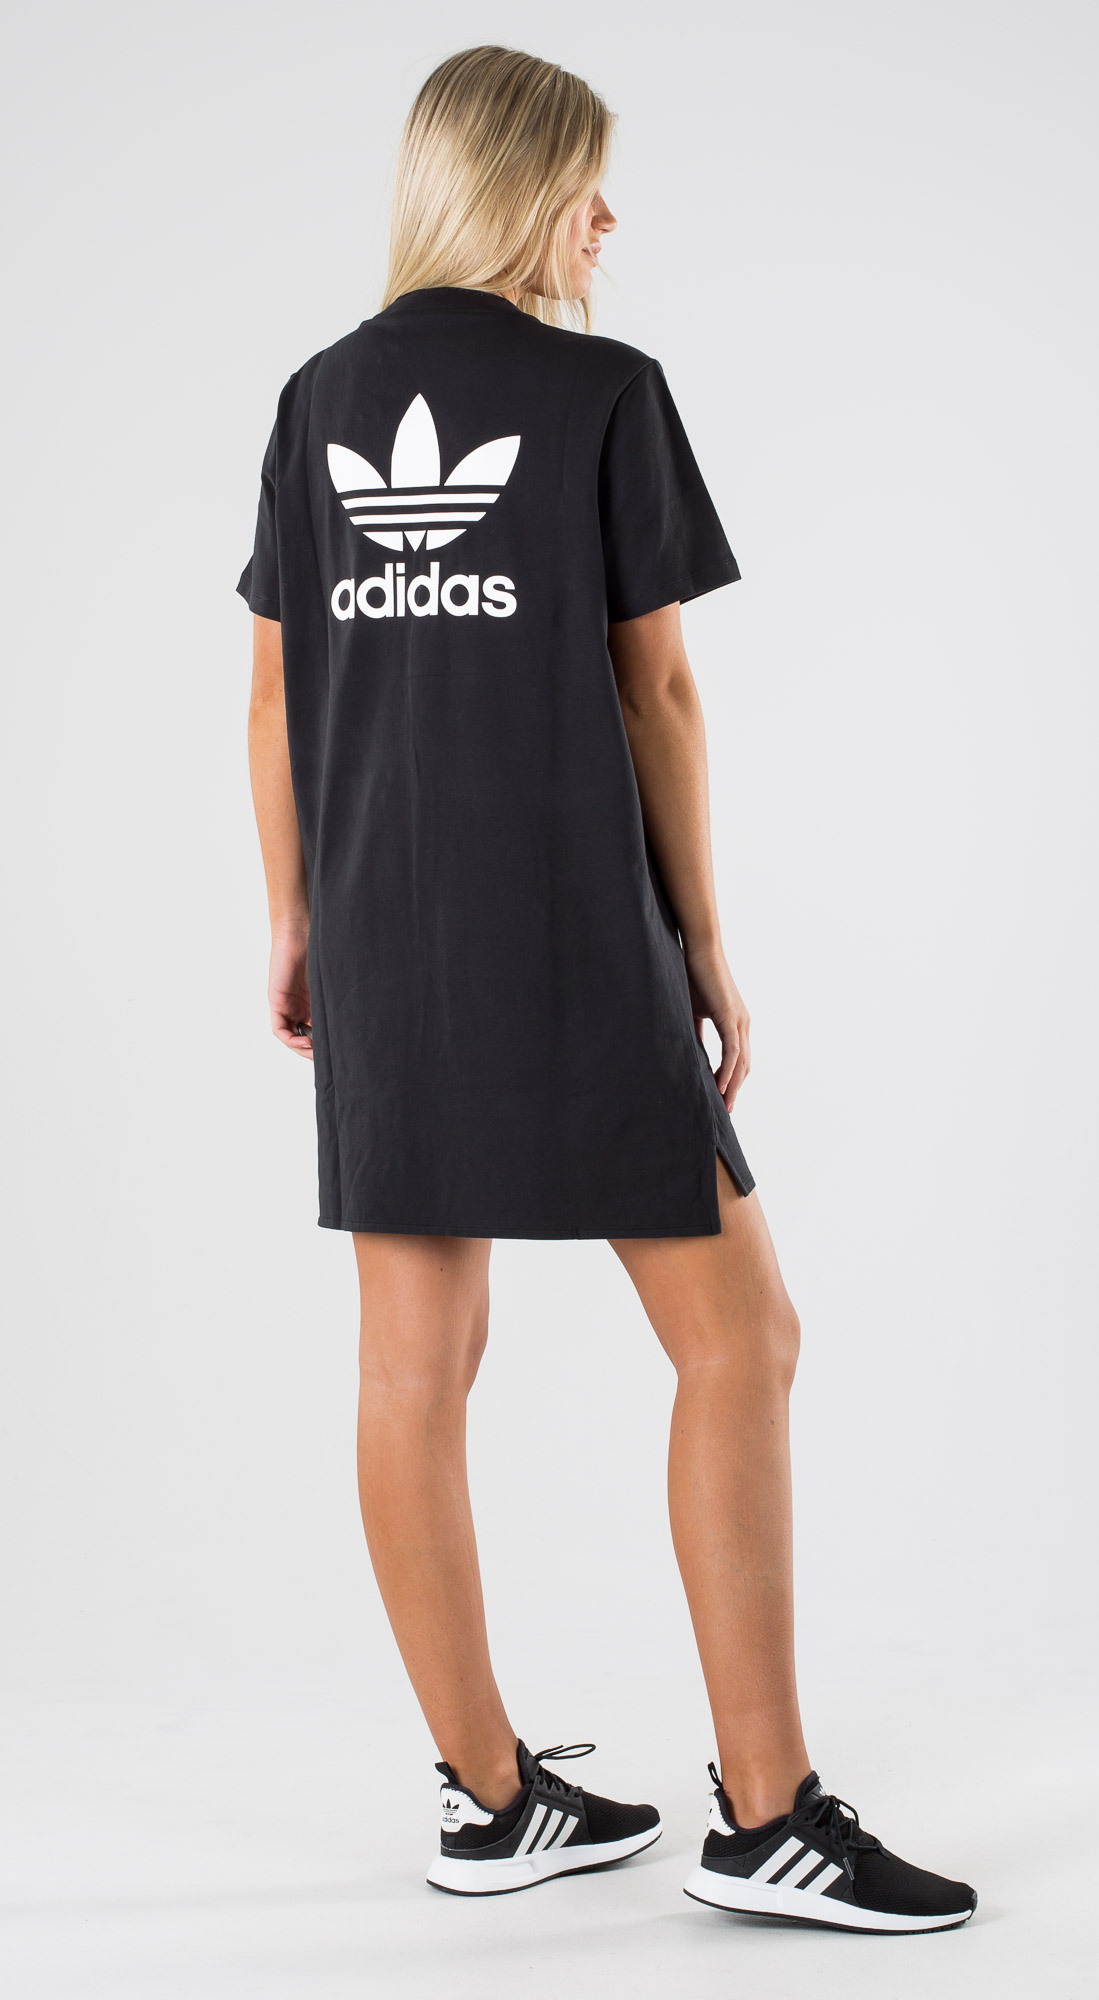 Adidas Originals Trefoil Dress Black 